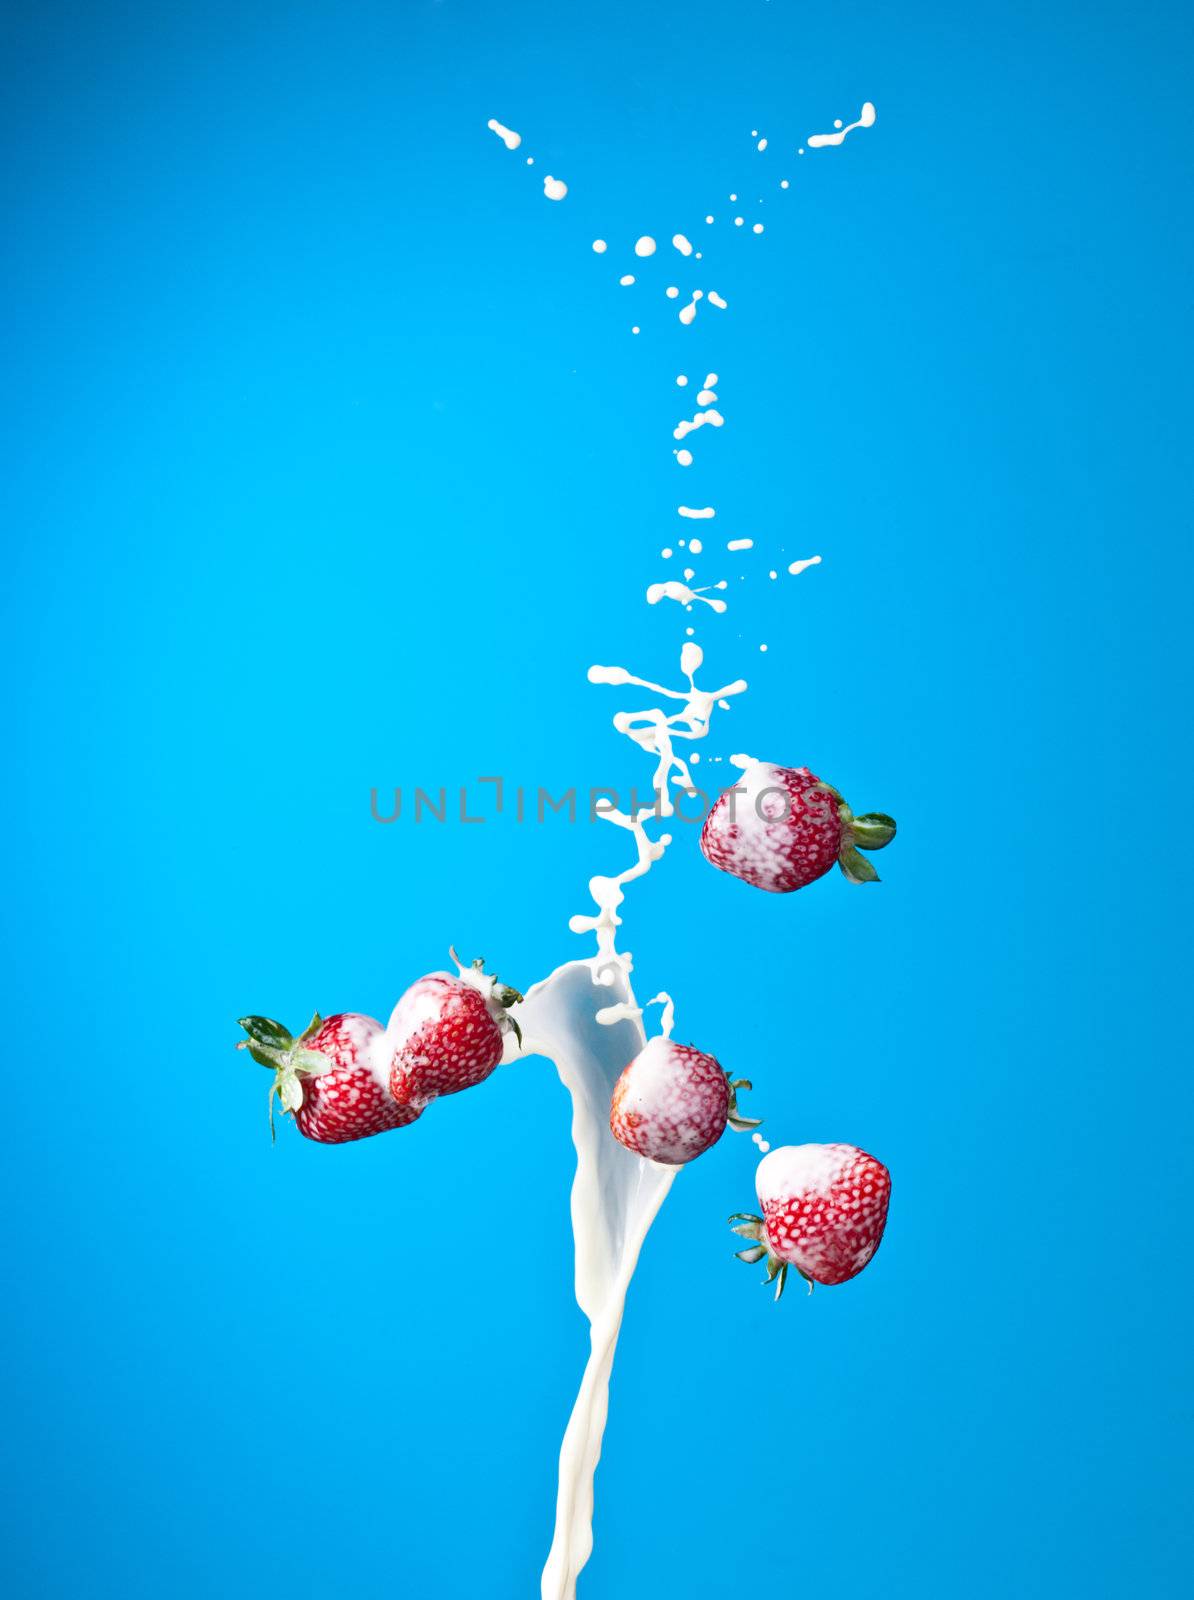 milk splash with red ripe strawberry over blue background